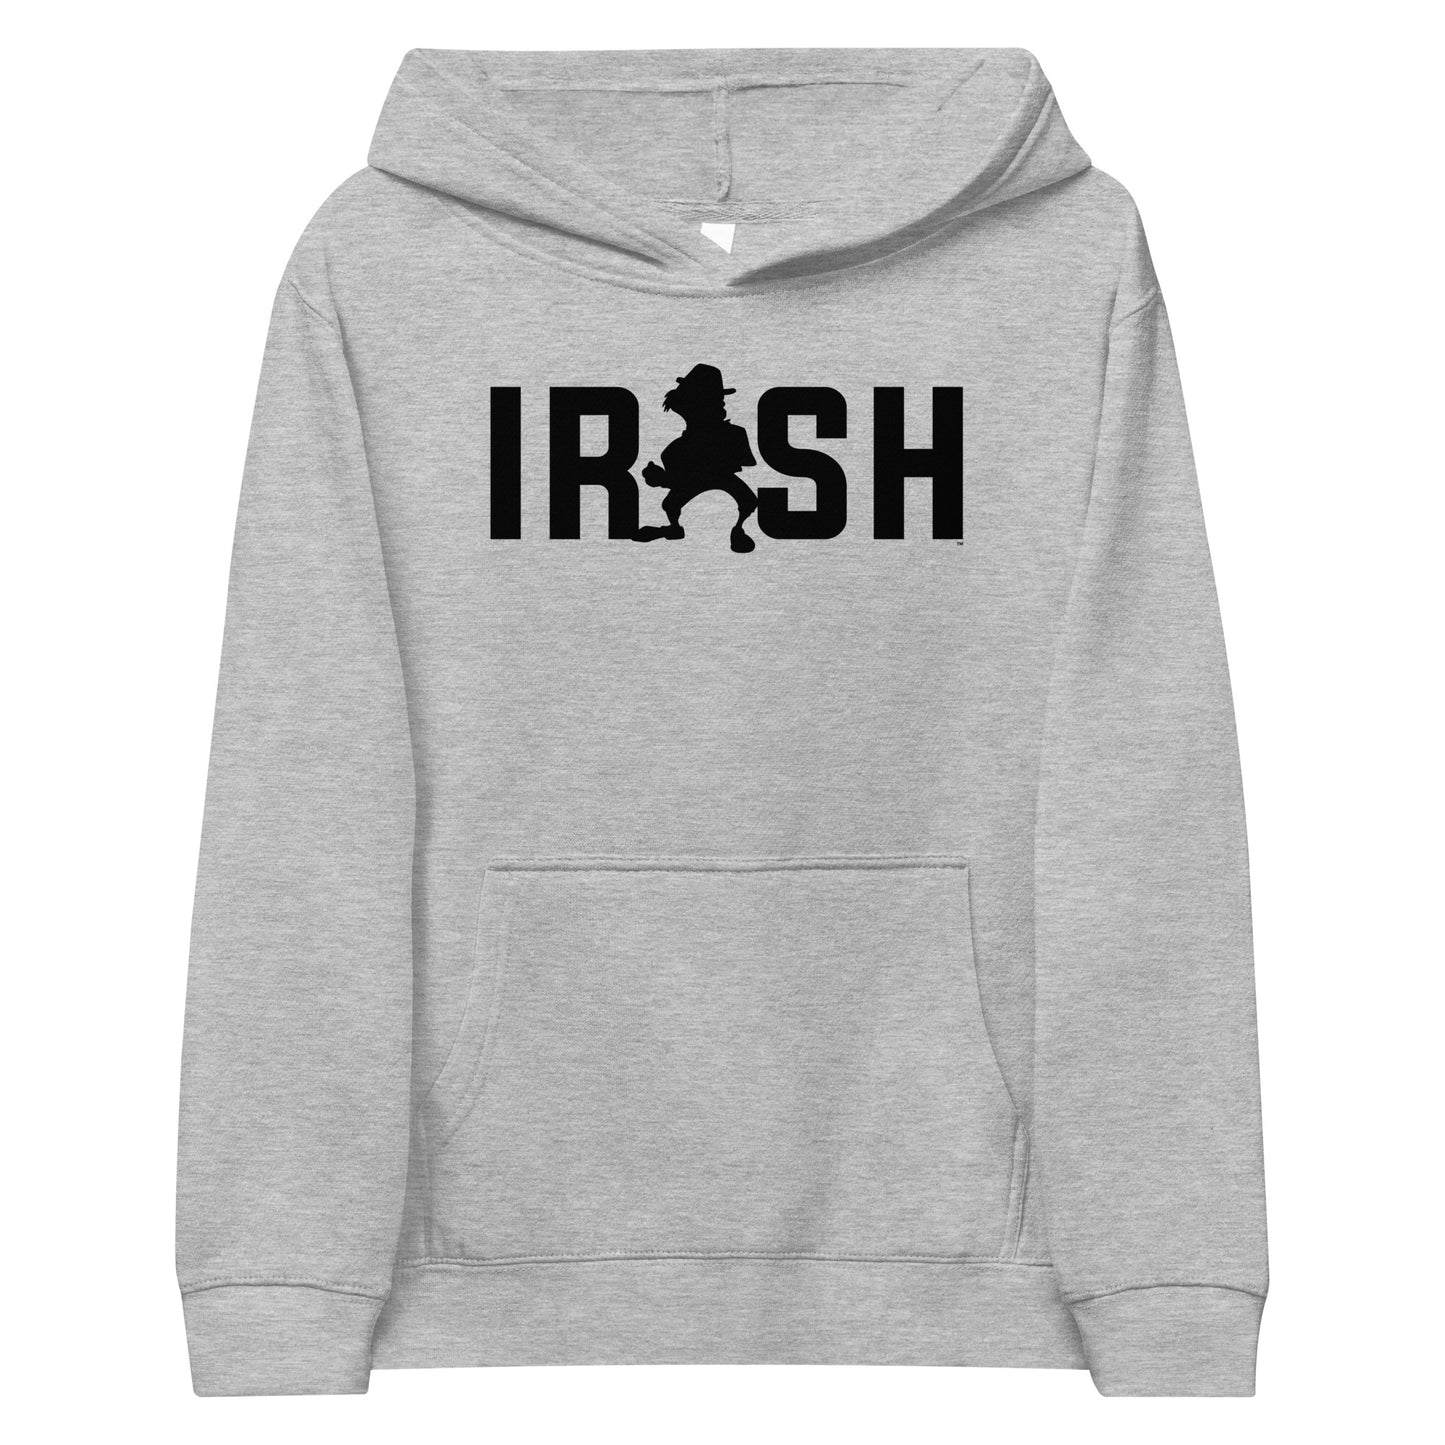 IRISH MAN™ ORIGINAL LOGO-Kids fleece hoodie